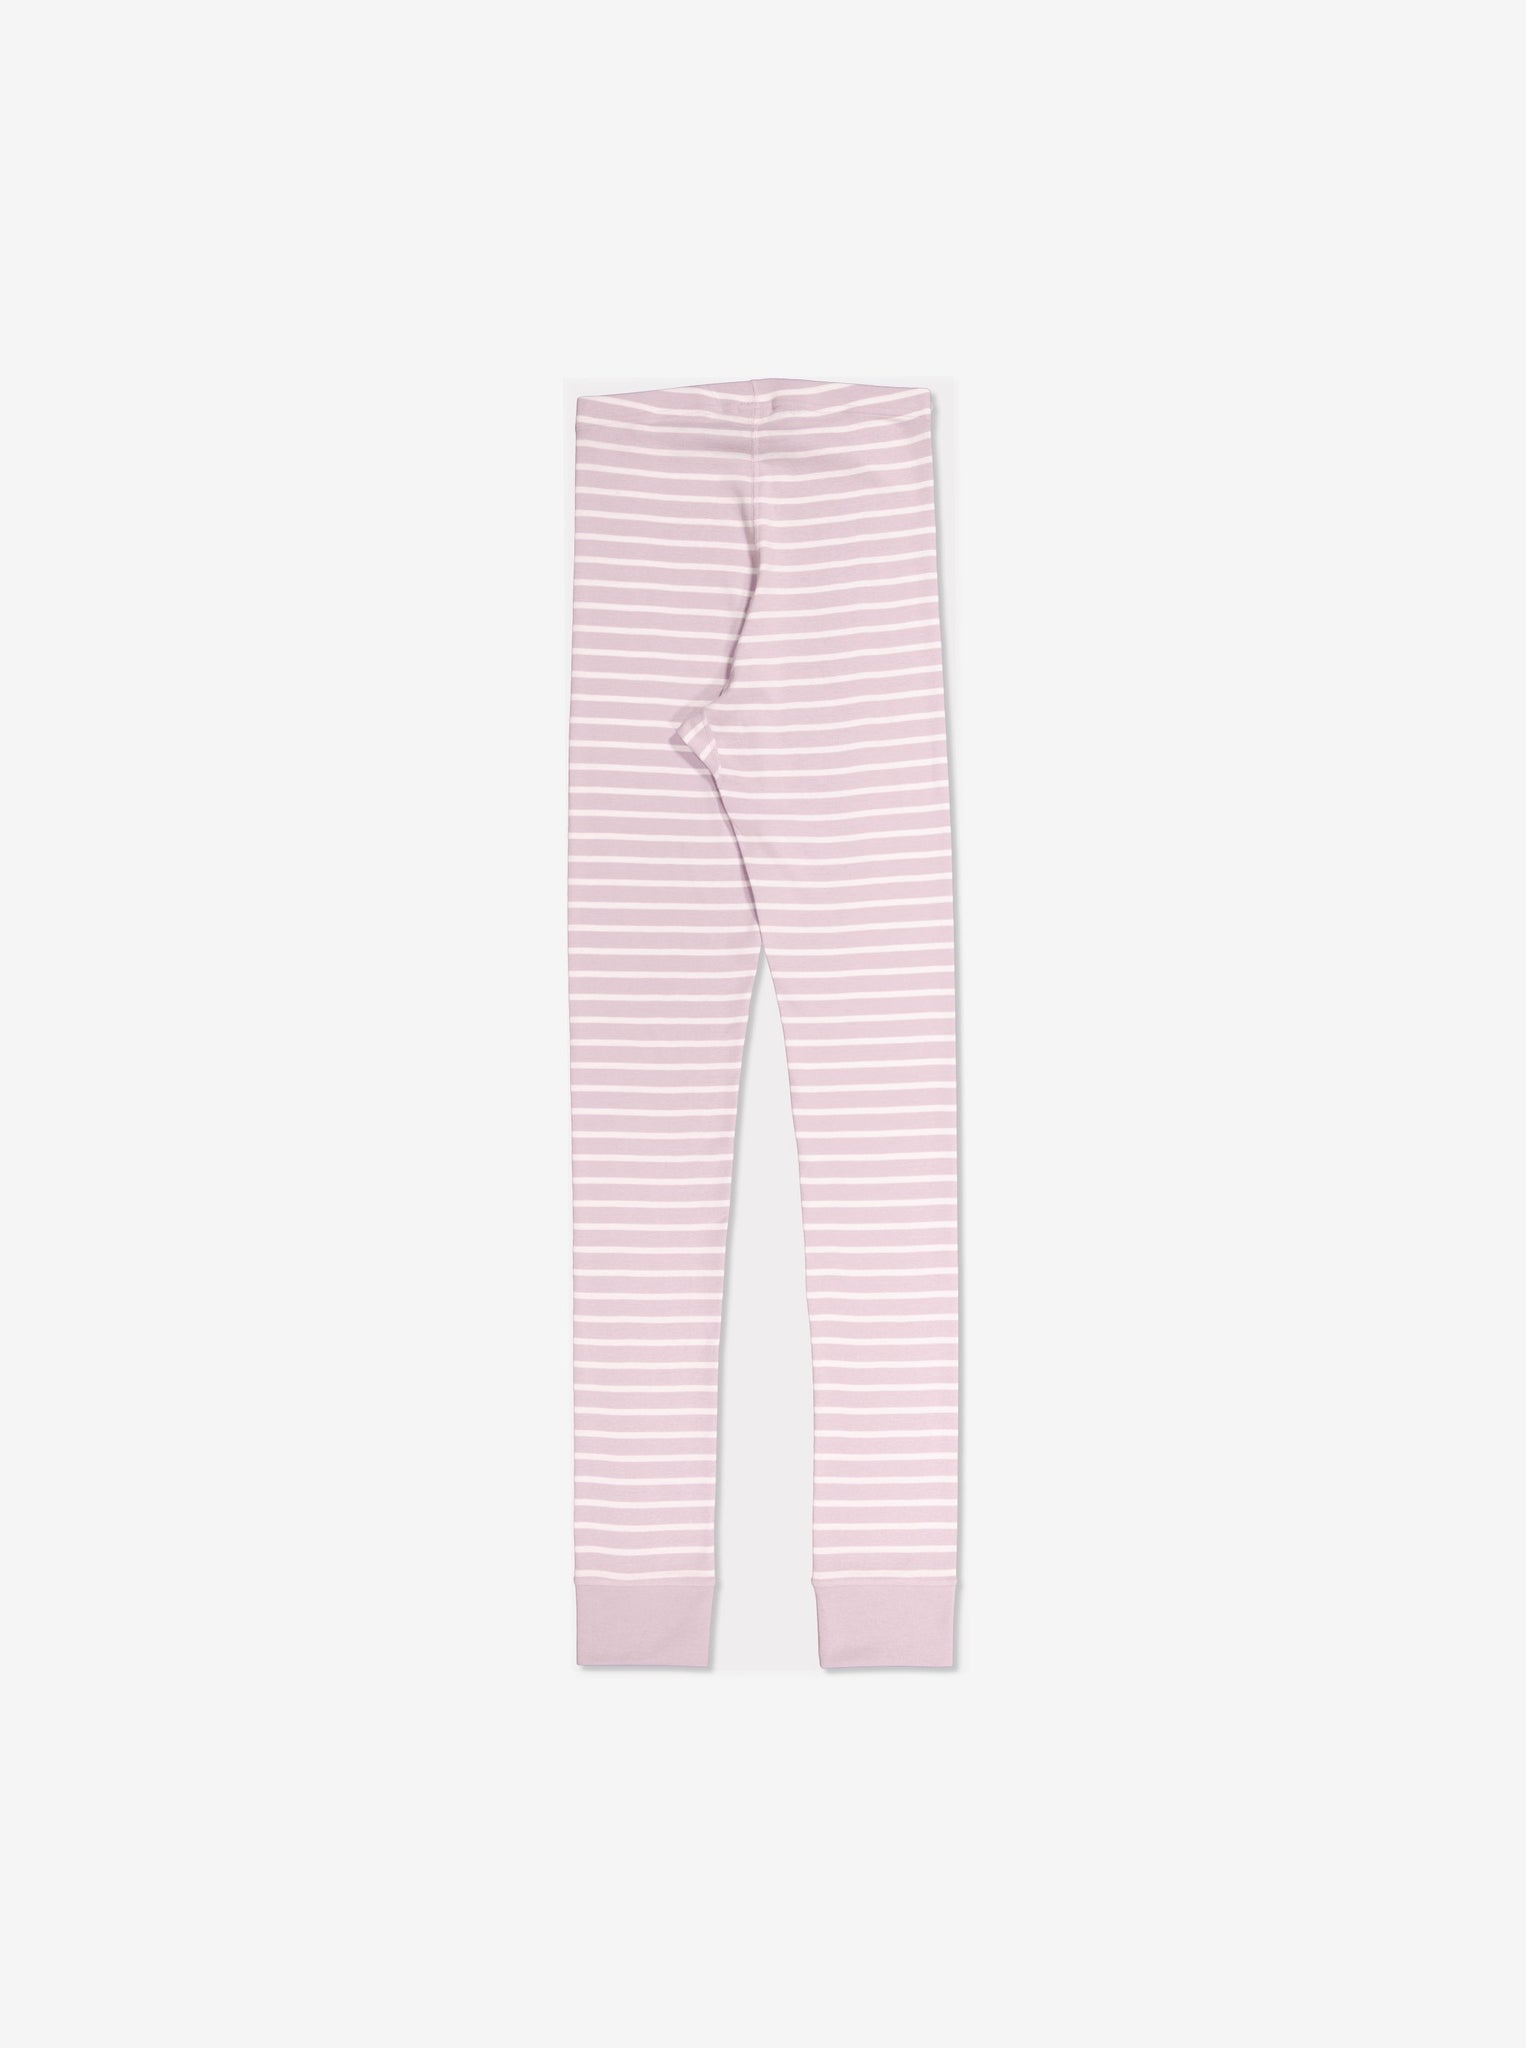  Organic Striped Pink Adult Pyjamas from Polarn O. Pyret Kidswear. Made with 100% organic cotton.